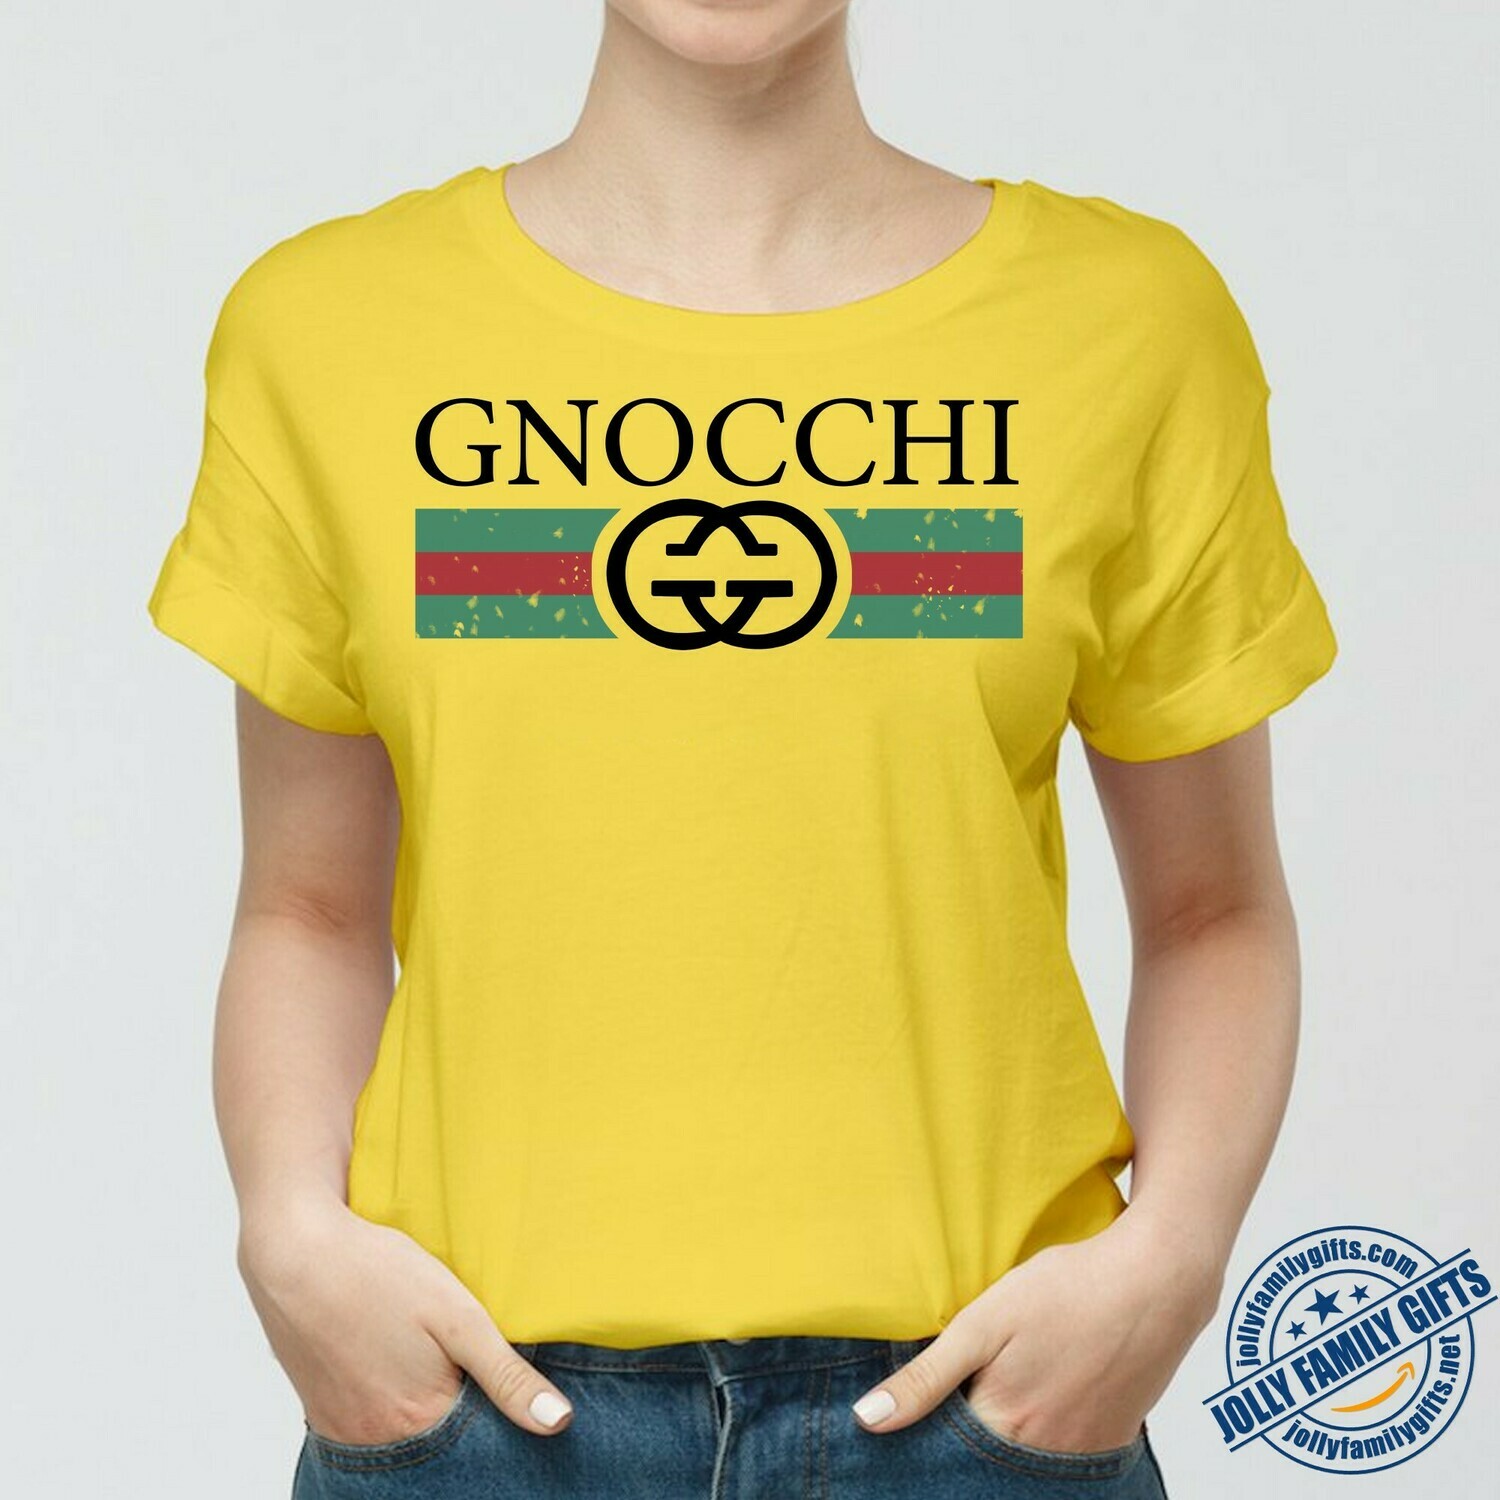 gnocchi t shirt gucci